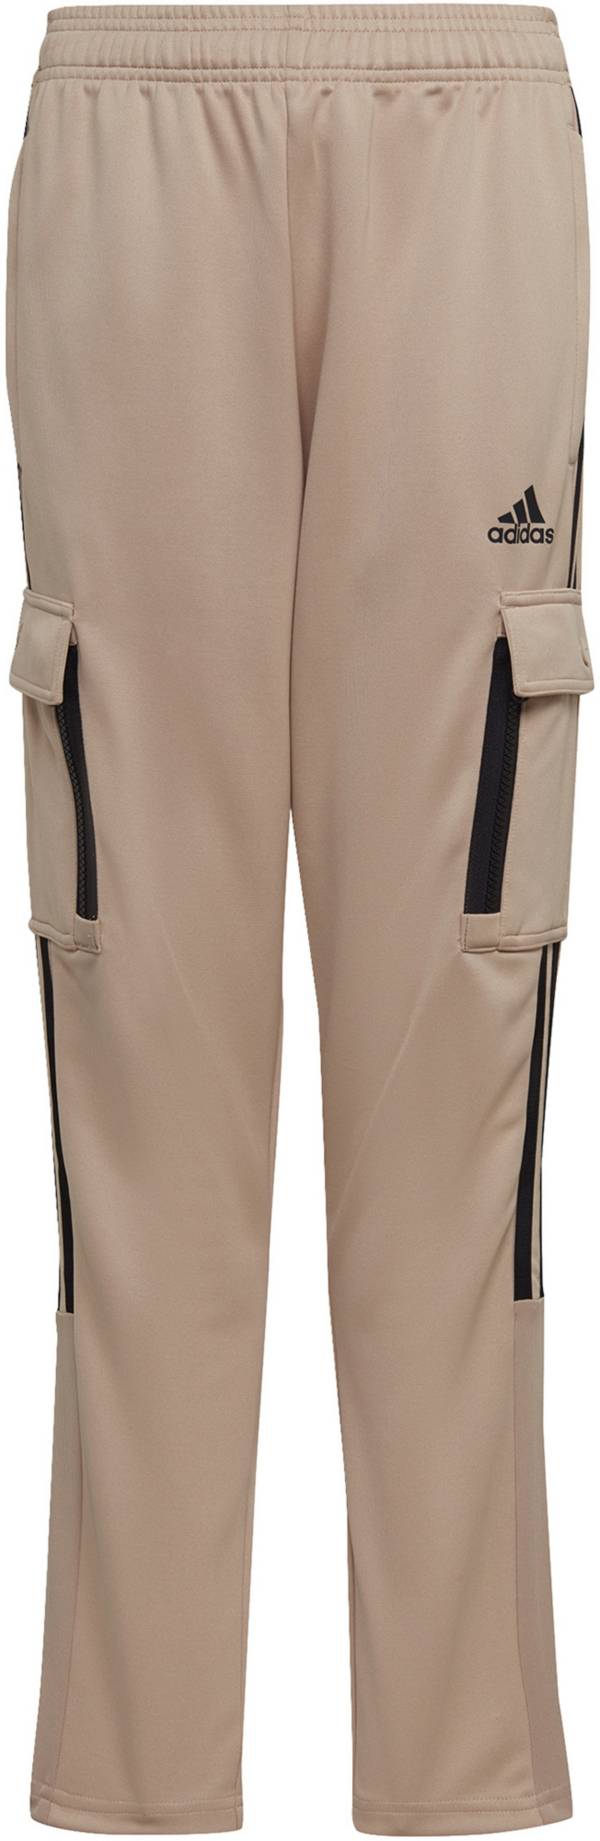 adidas Boys' Tiro Cargo Pants product image